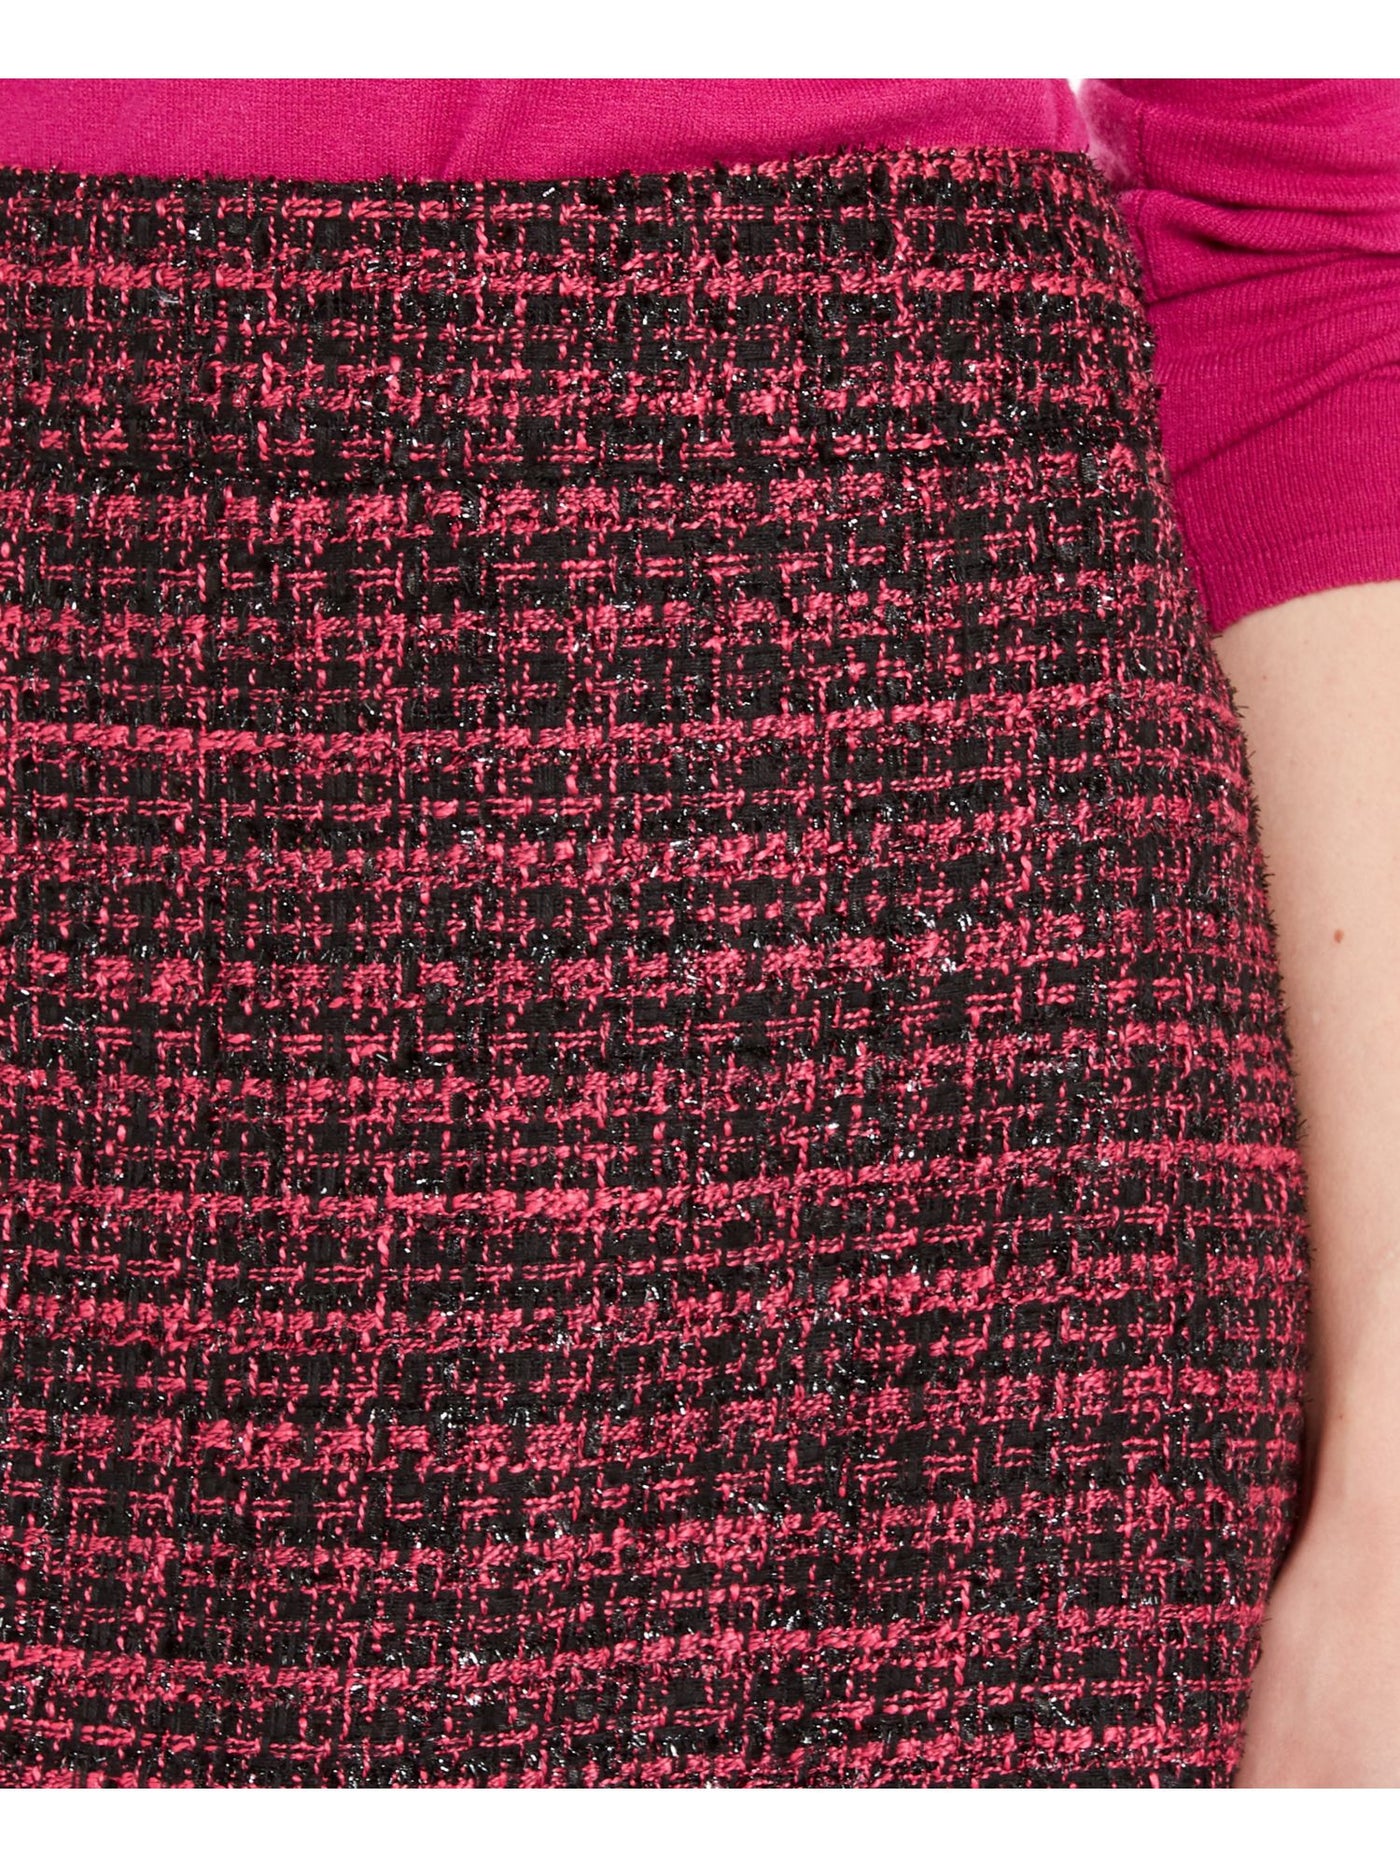 MAISON JULES Womens Pink Zippered Glitter Mini Pencil Skirt 0